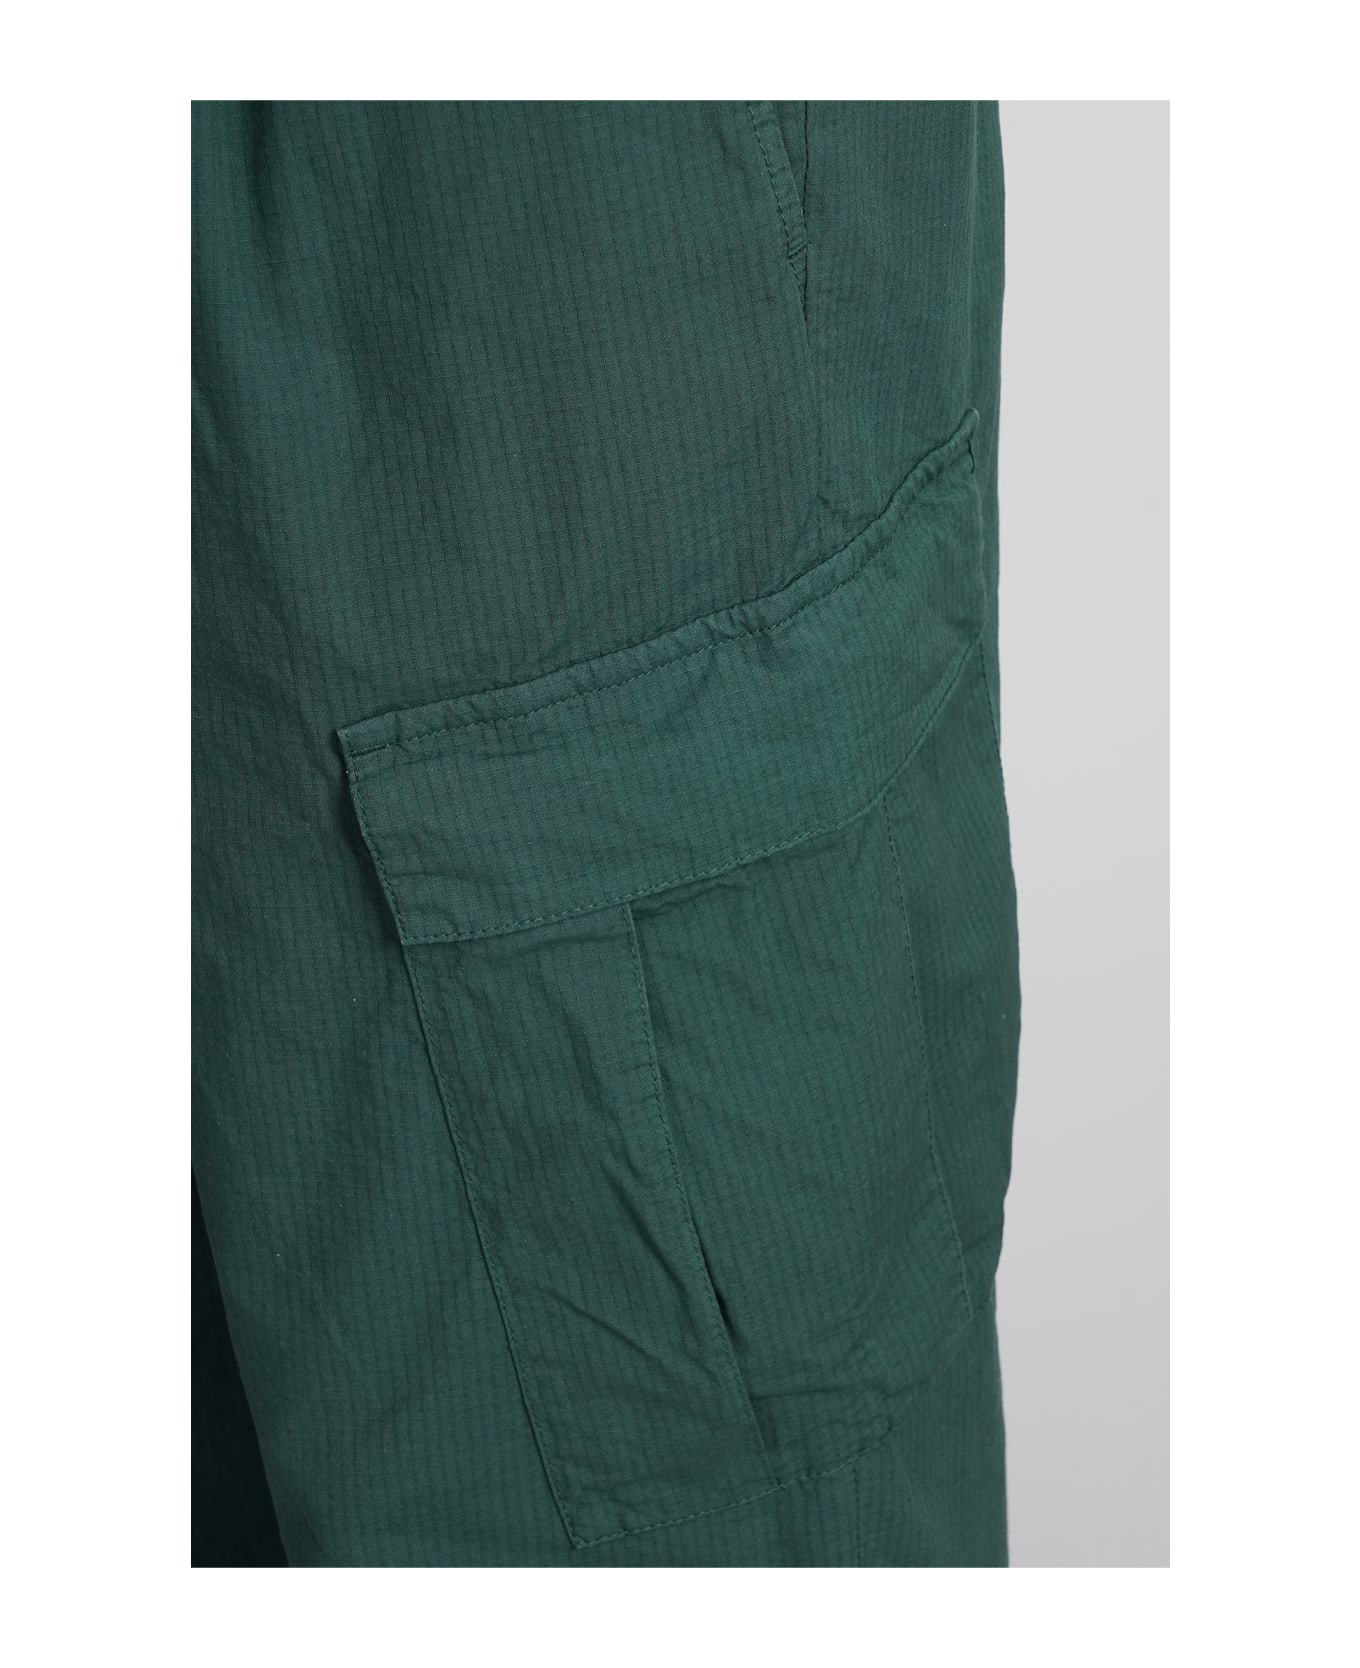 Barena Rambagio Pants In Green Cotton - green スウェットパンツ